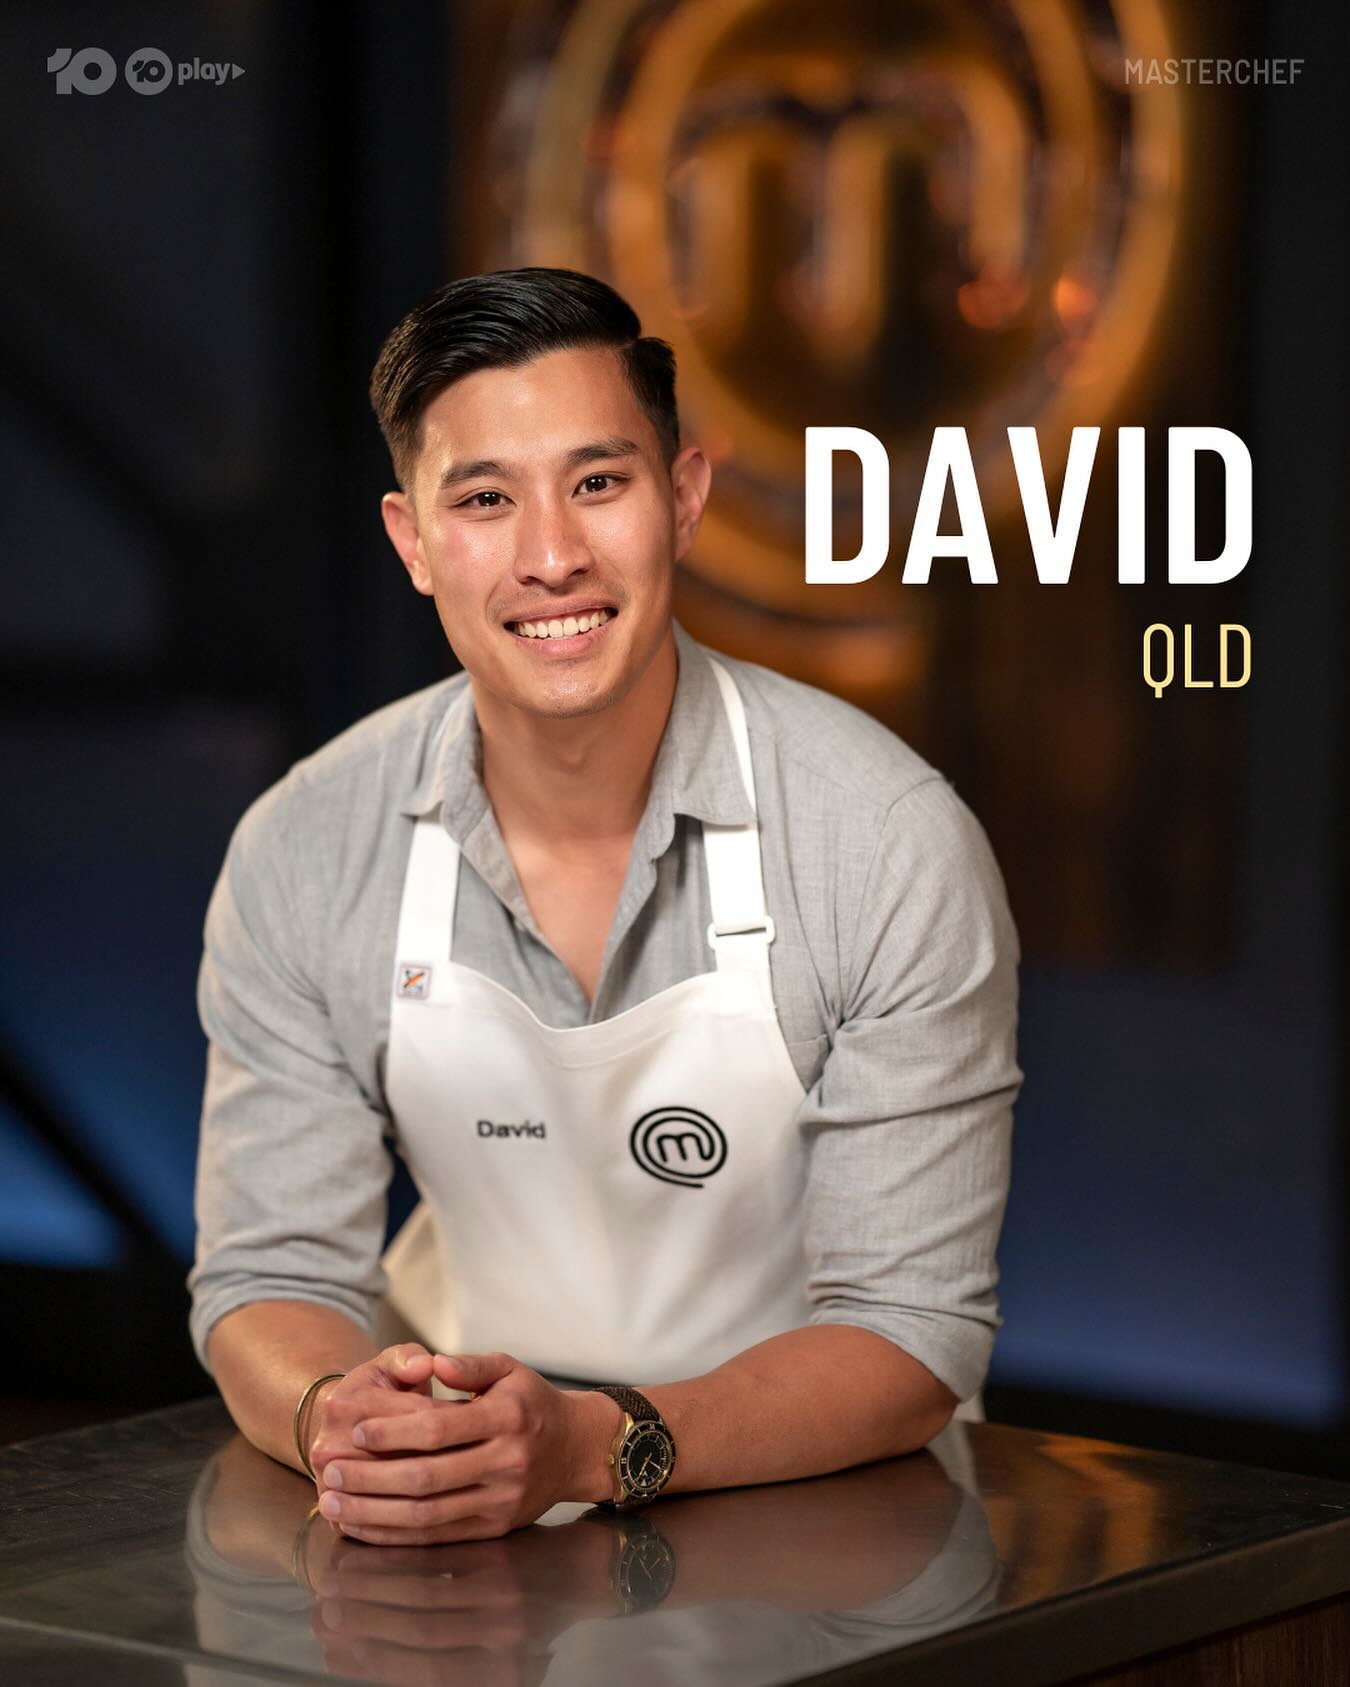 David grew up in Singapore